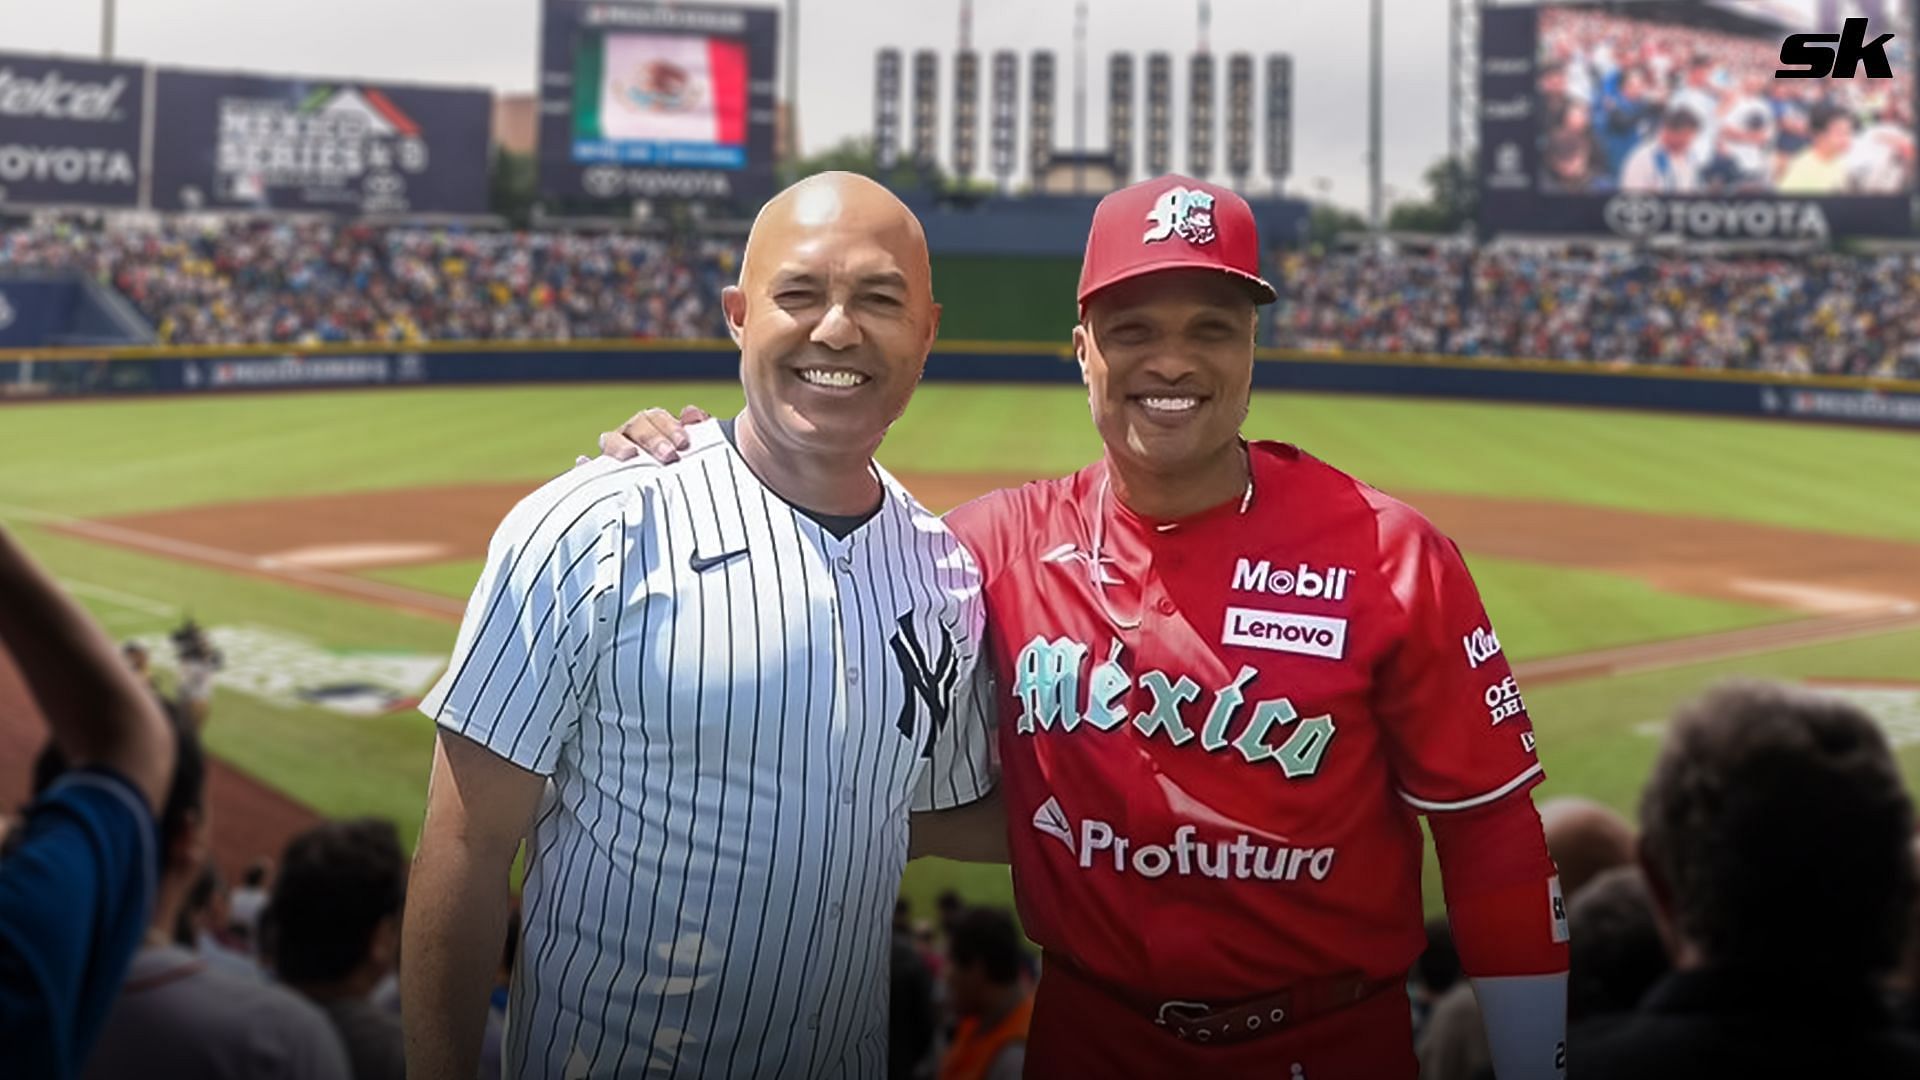 Mariano Rivera and Robinson Cano were former teammates with the NY Yankees